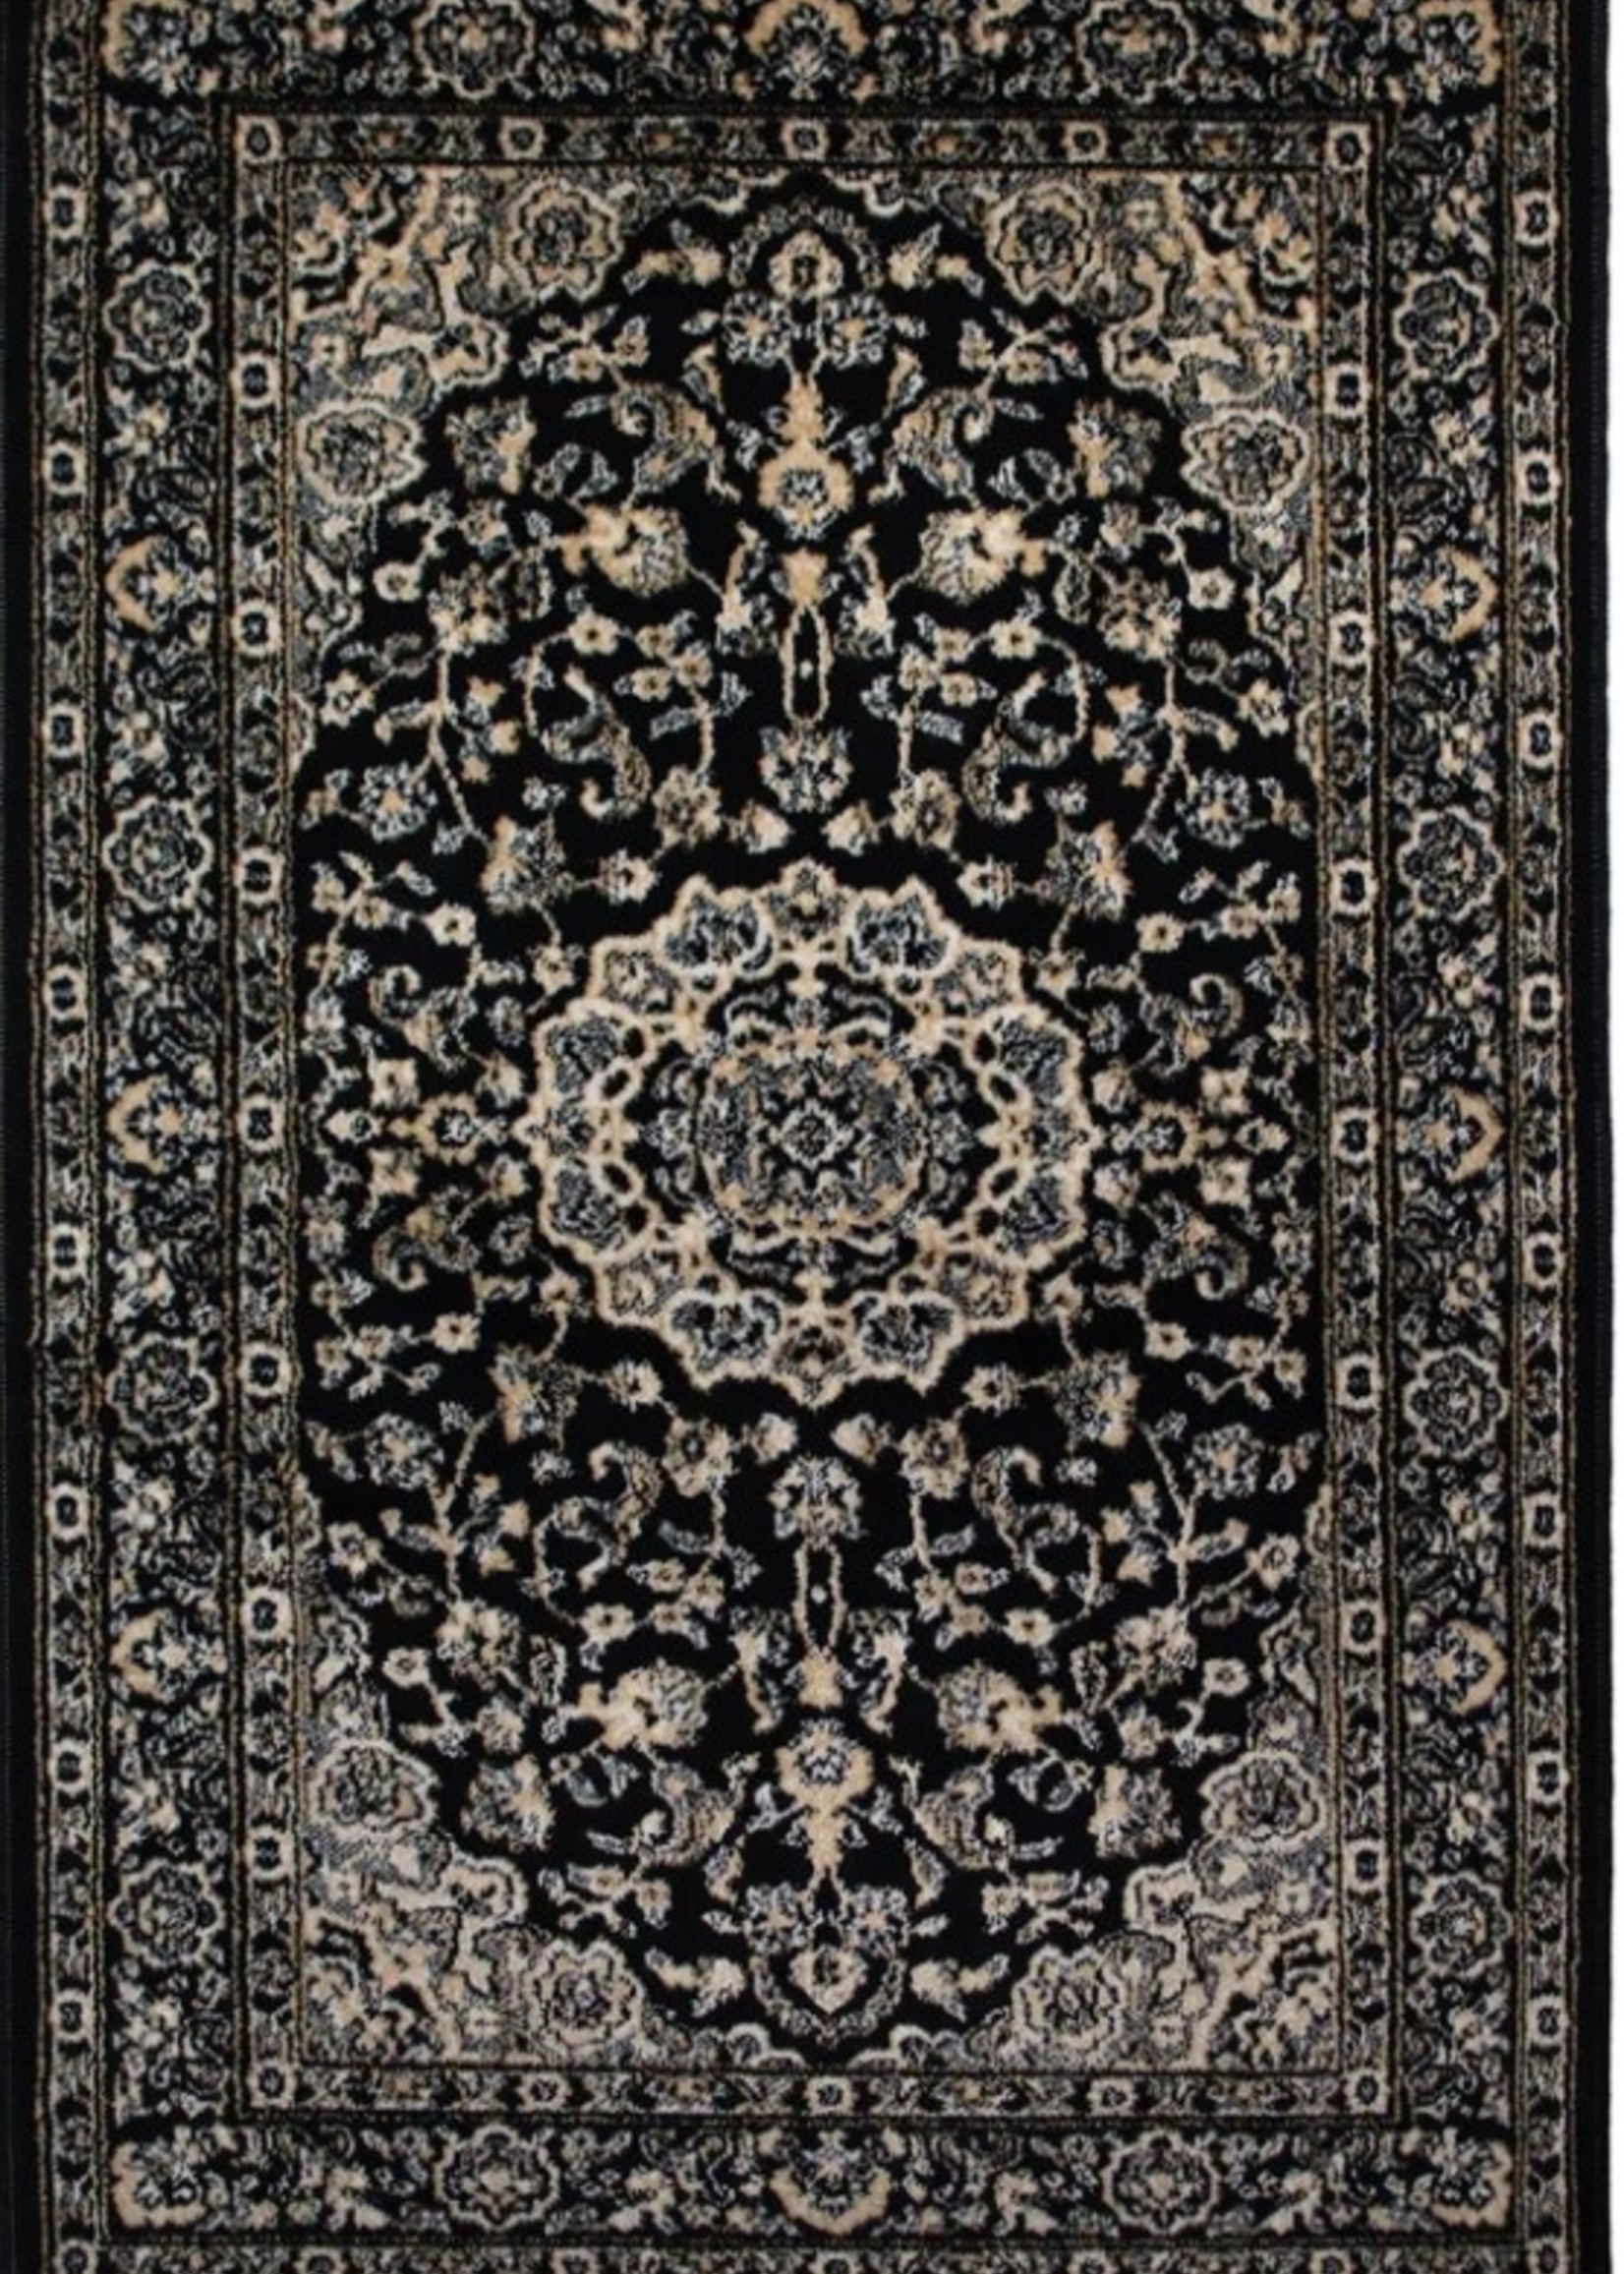 Avocado Decor Art Silk Tabriz Black Area Carpet * 3' x 4.5'